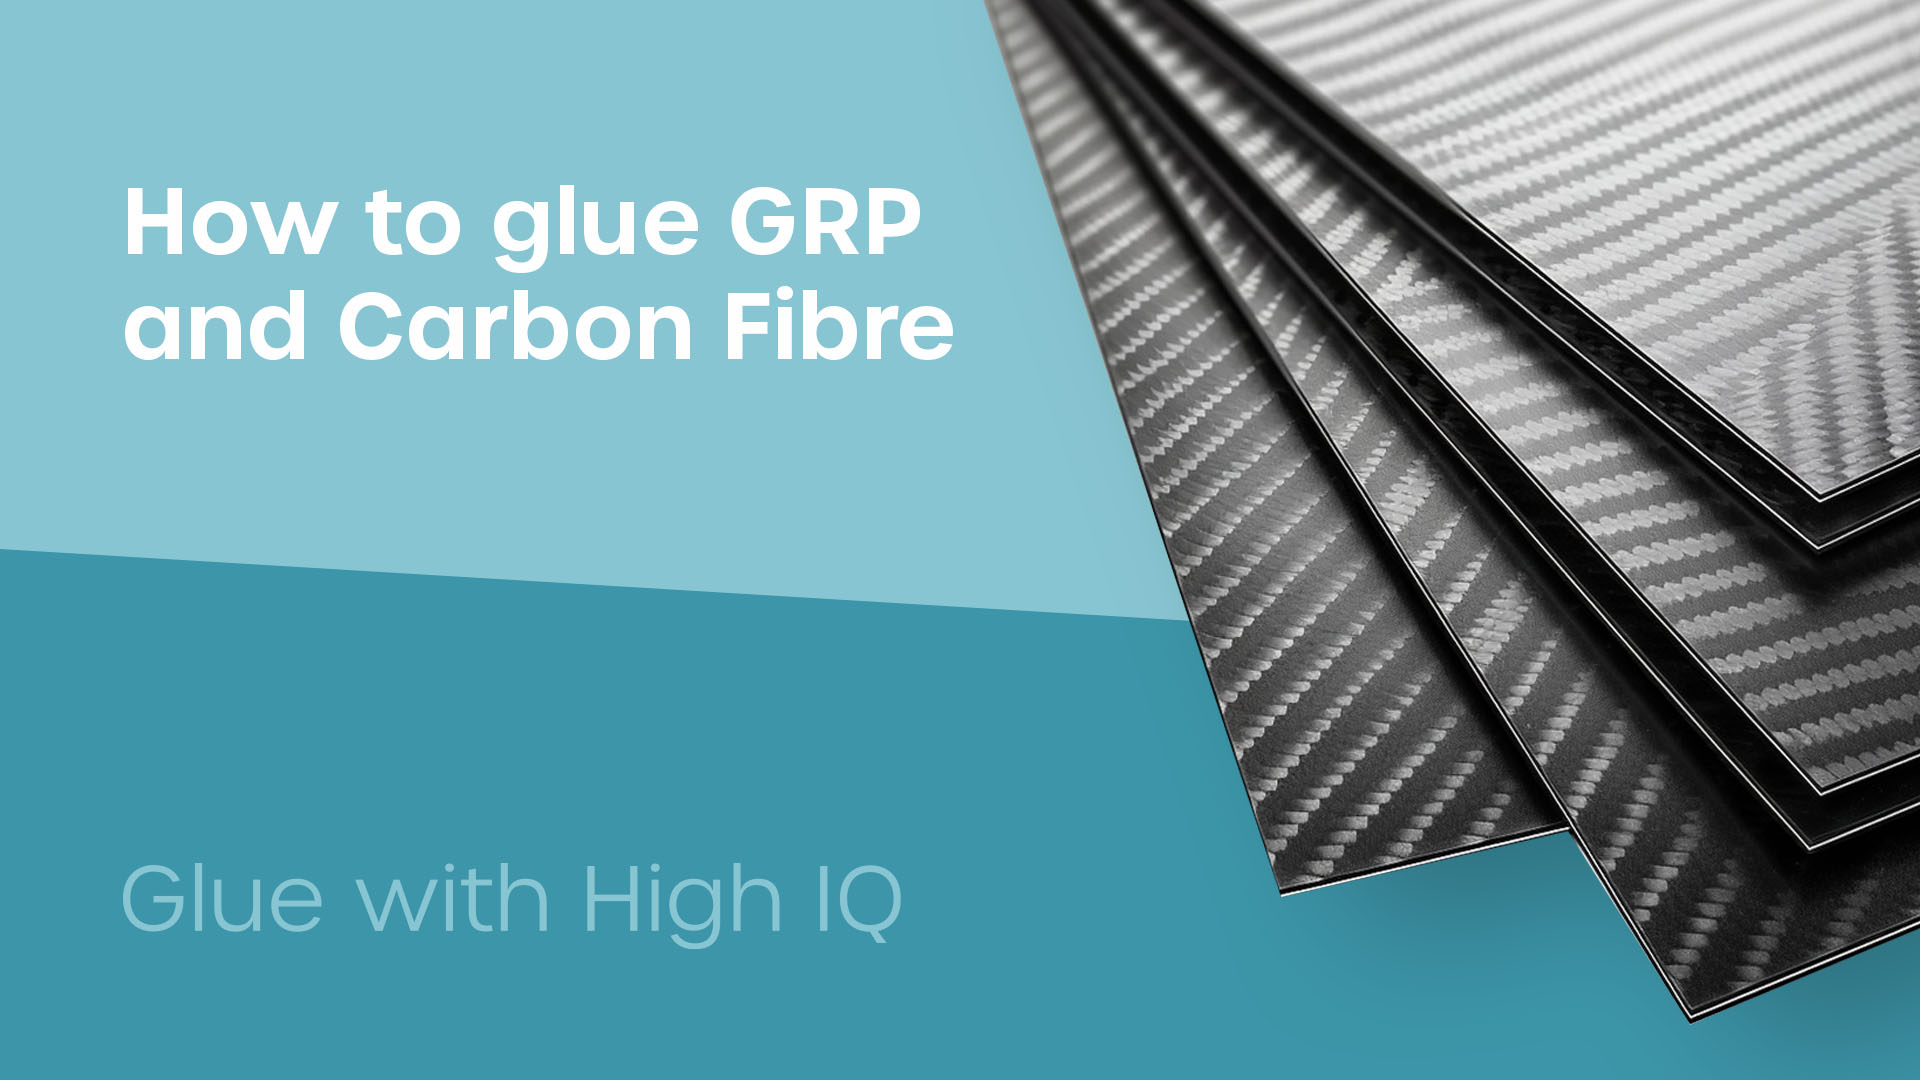 Tips and tricks for bonding composite materials like carbon fibre and GRP